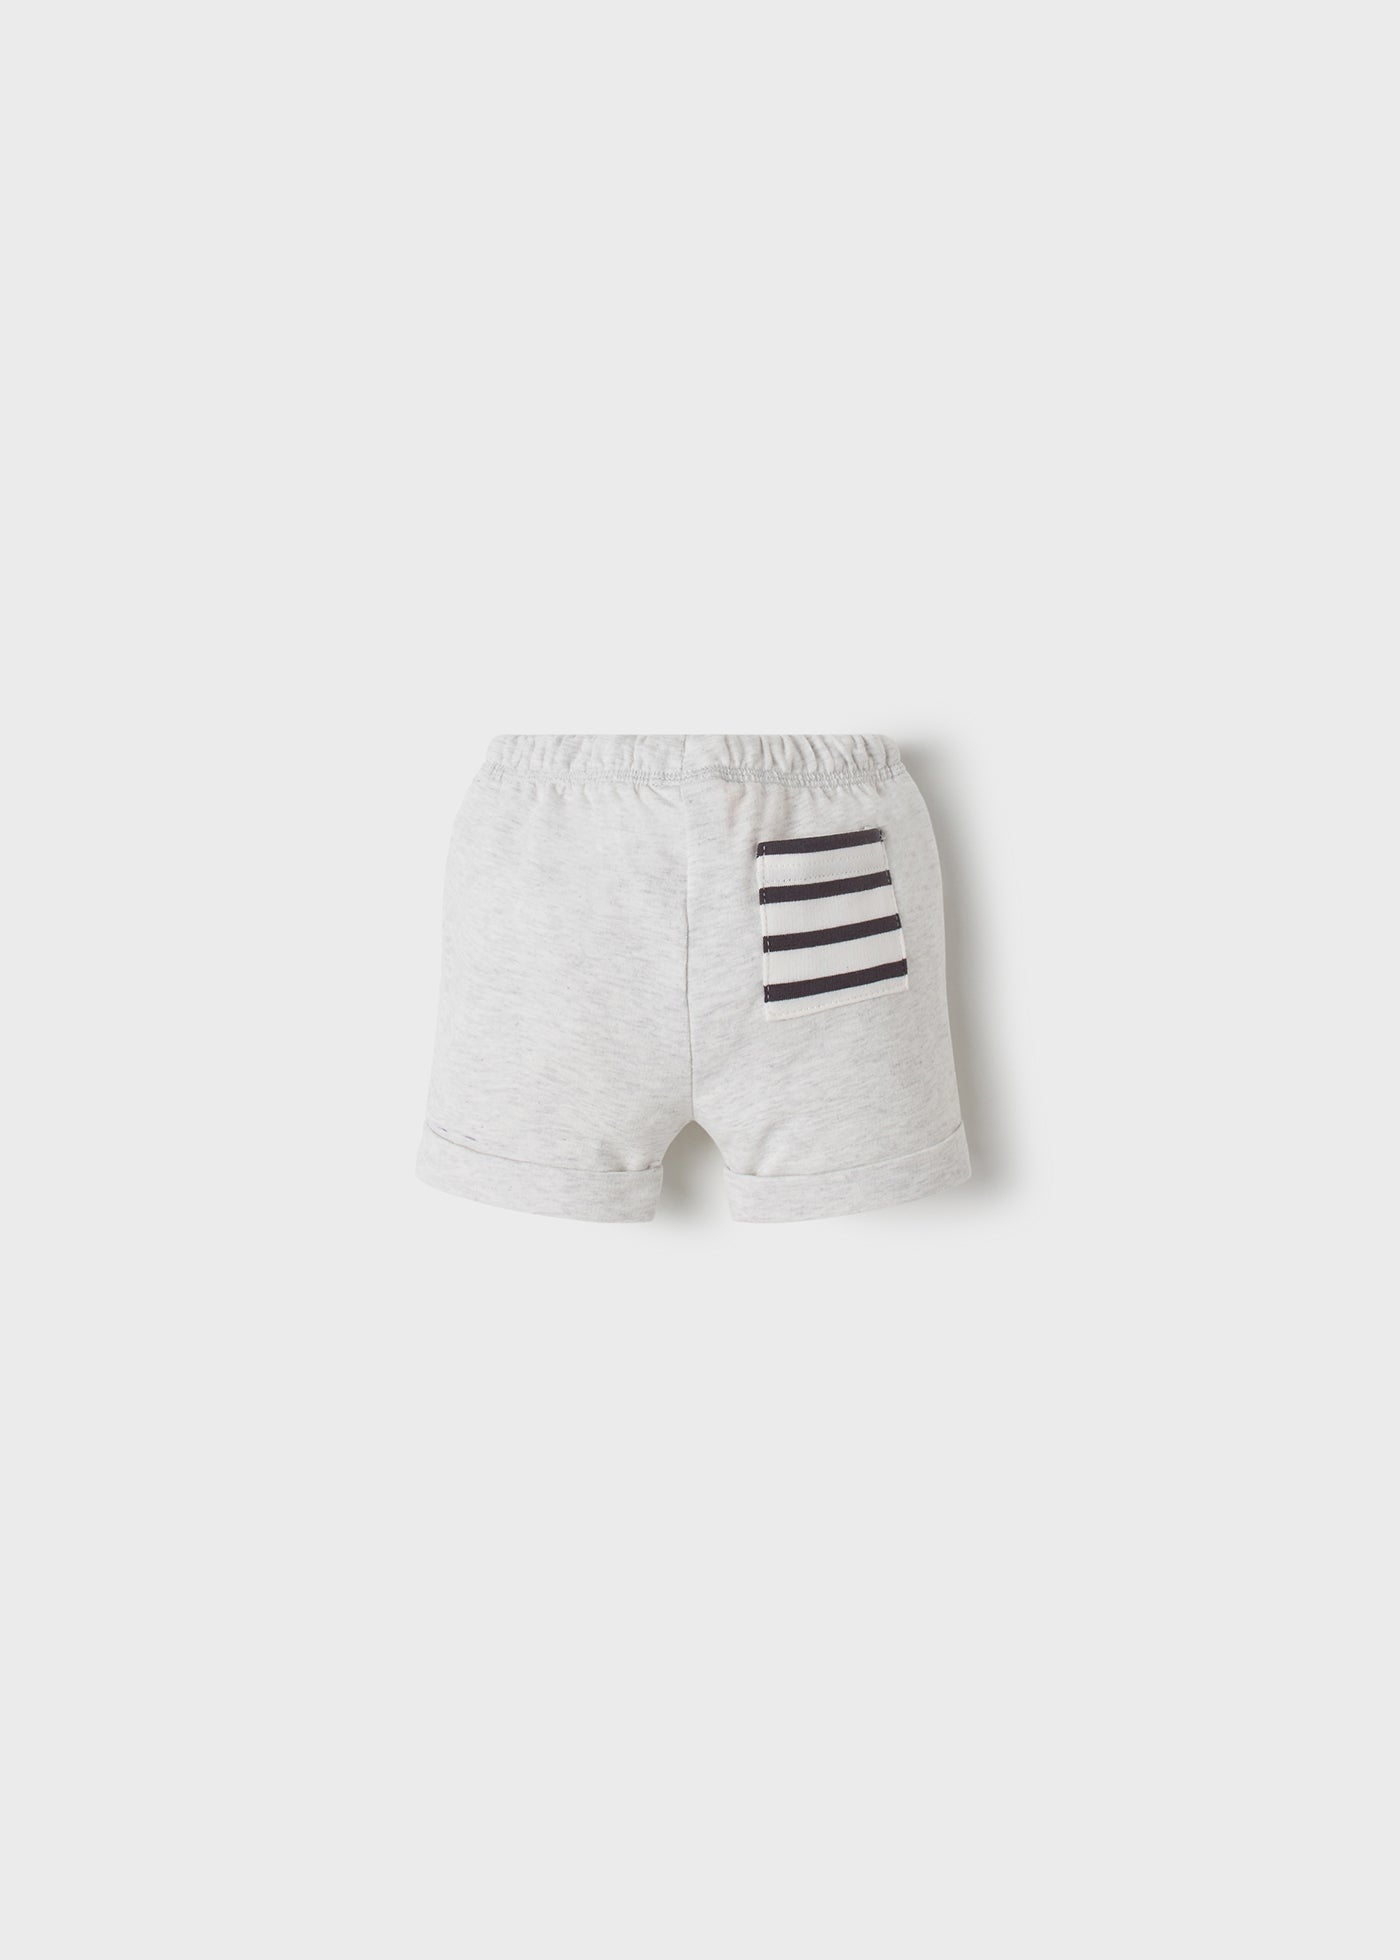 Mayoral Baby Bermuda Knit Shorts w/Tiger_ Heather Grey 1229-73